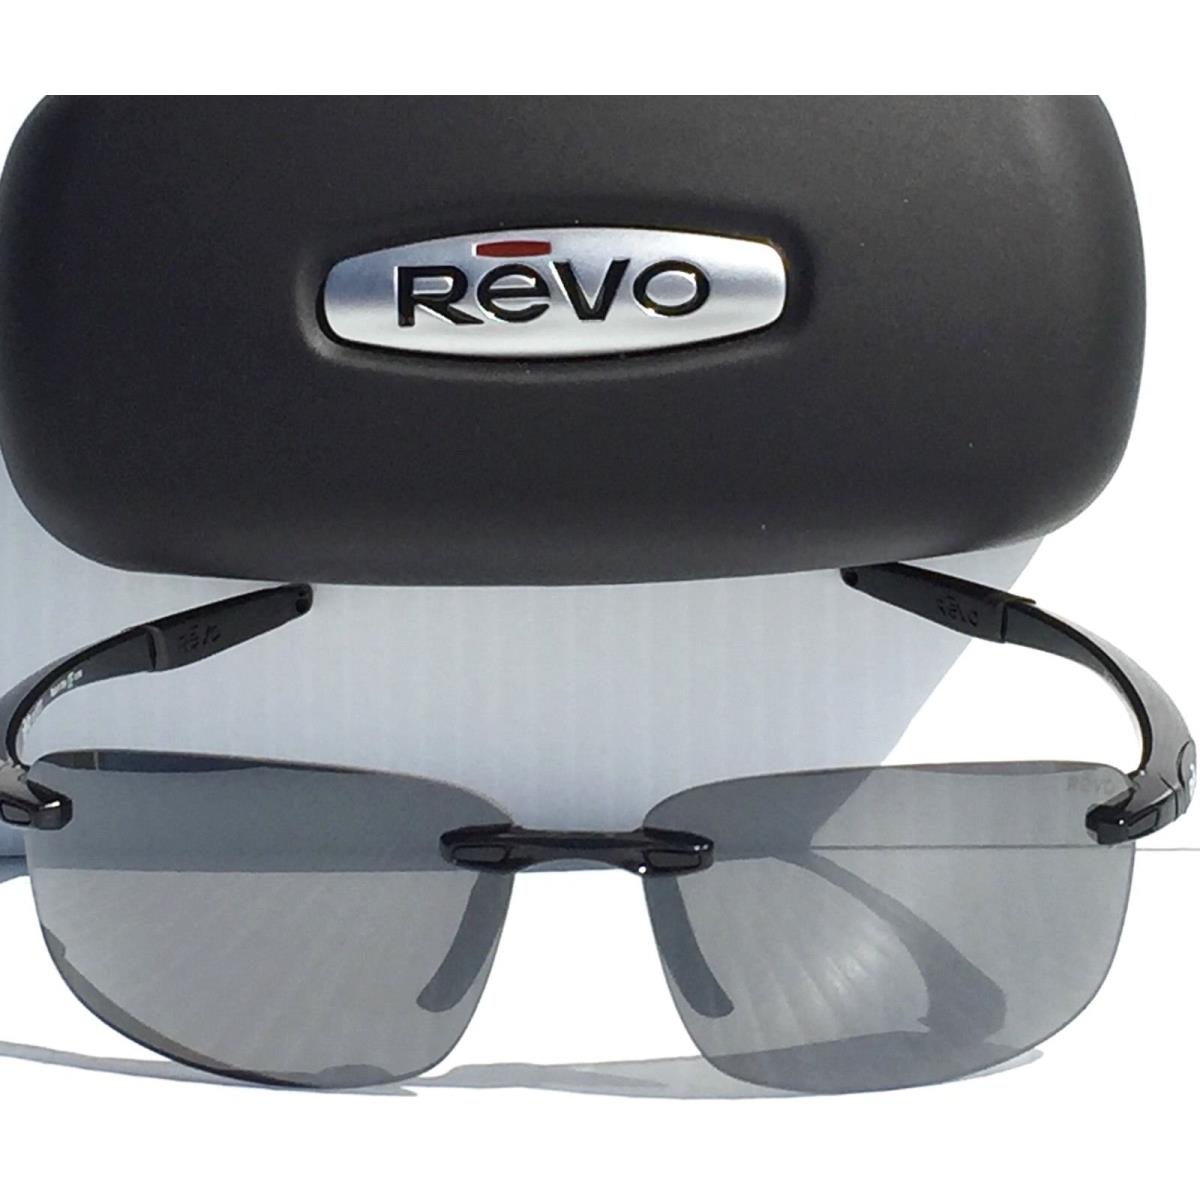 Revo Descend N Black w Grey Polarized Lens Sunglass 4059 01 GY